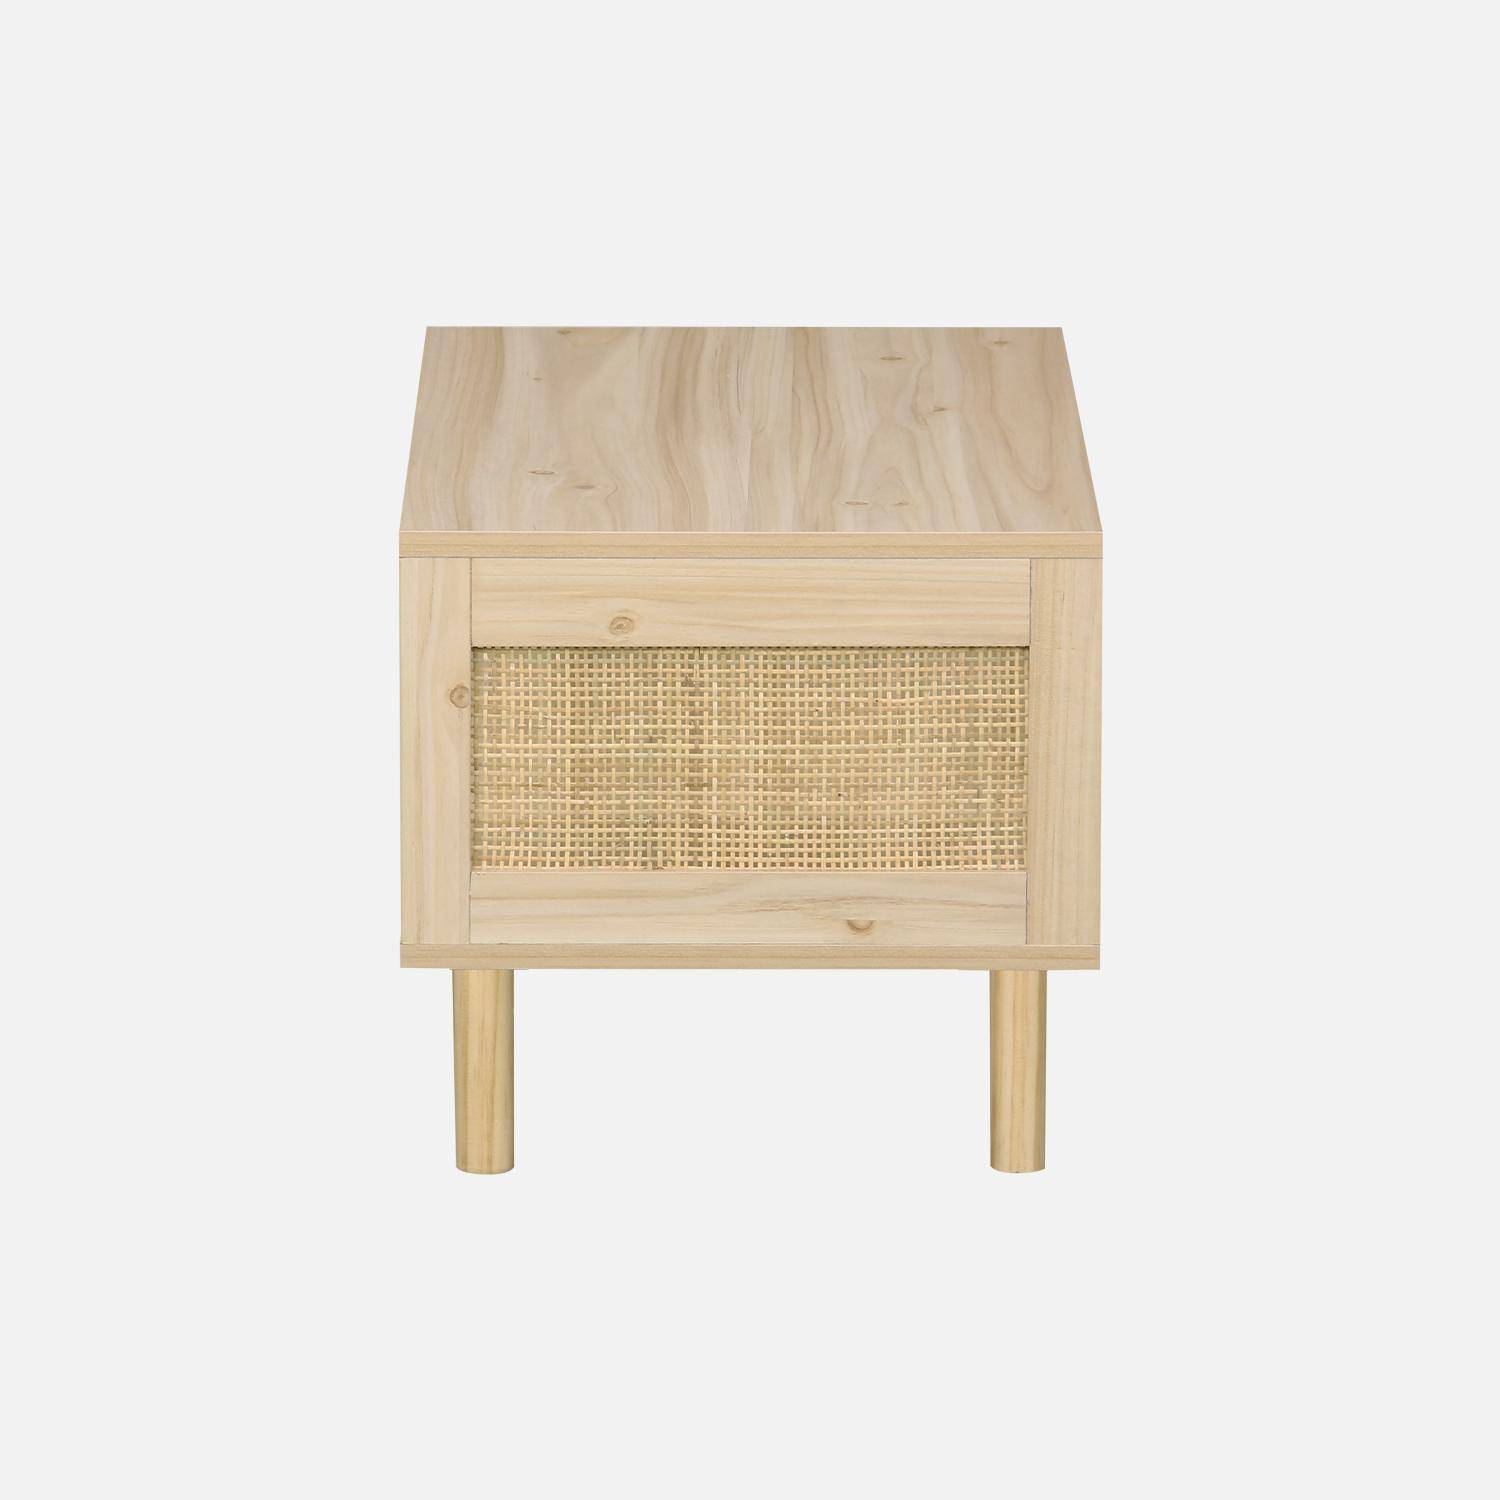 Woven rattan coffee table, 80x40x40cm, Camargue, Natural wood colour,sweeek,Photo5